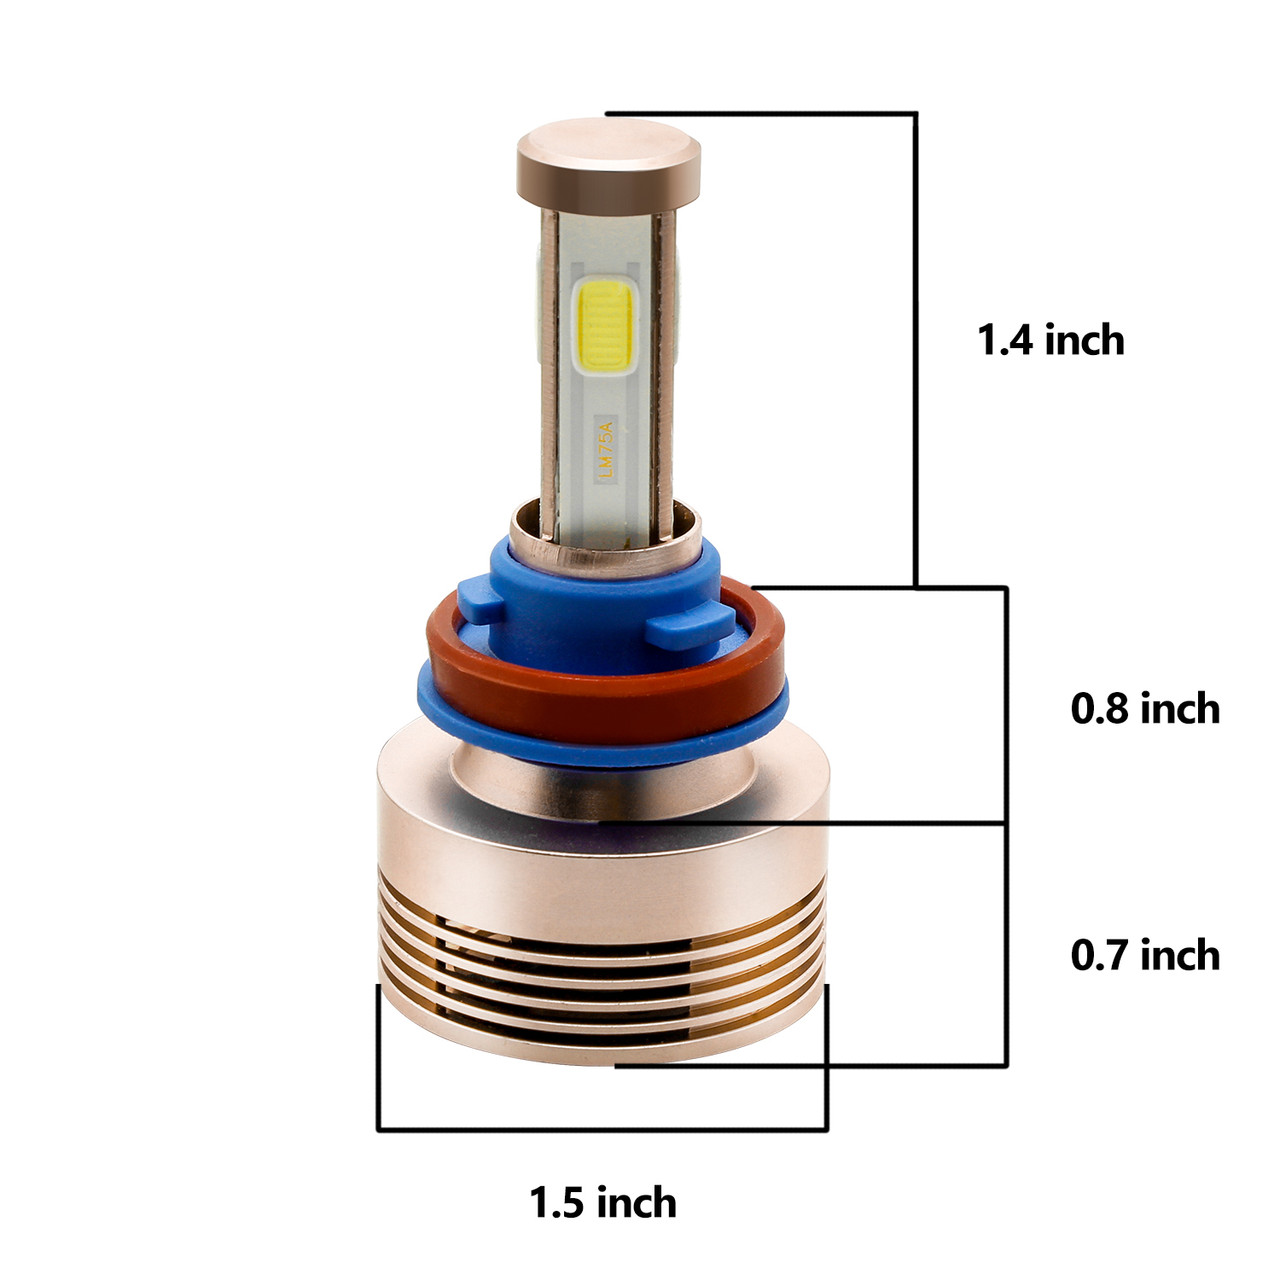 Projector Compliant H11 4-Sided Plug-N-Play LED Headlight Kit 2,500 LUX 6,000 Lumens w/ OEM Kelvin Color Race Sport Lighting